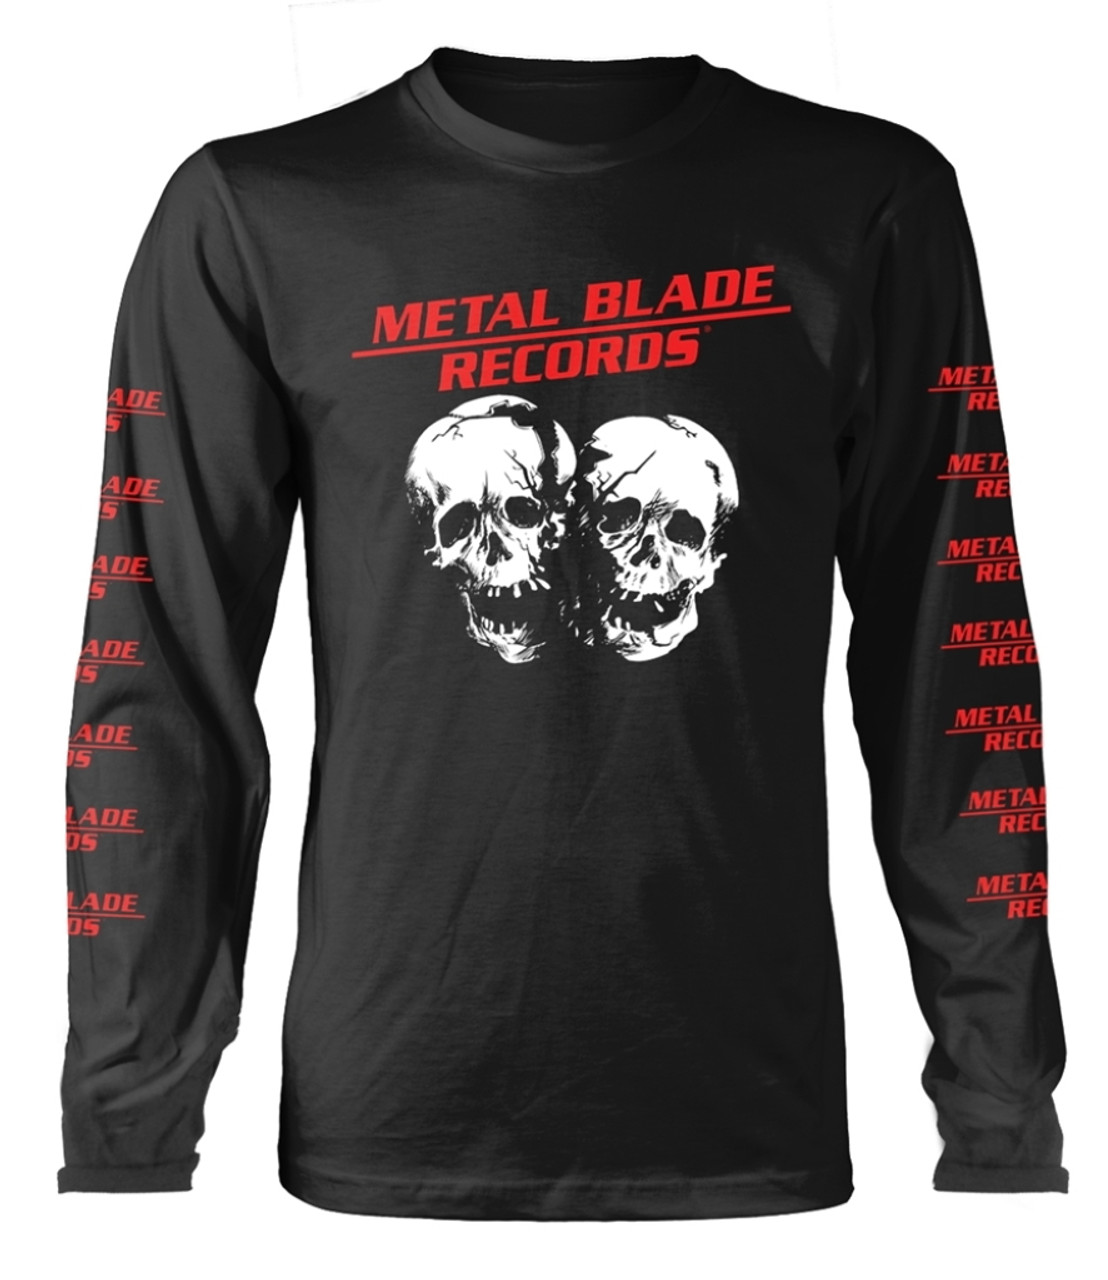 Metal Blade Records 'Crushed Skulls' (Black) Long Sleeve Shirt